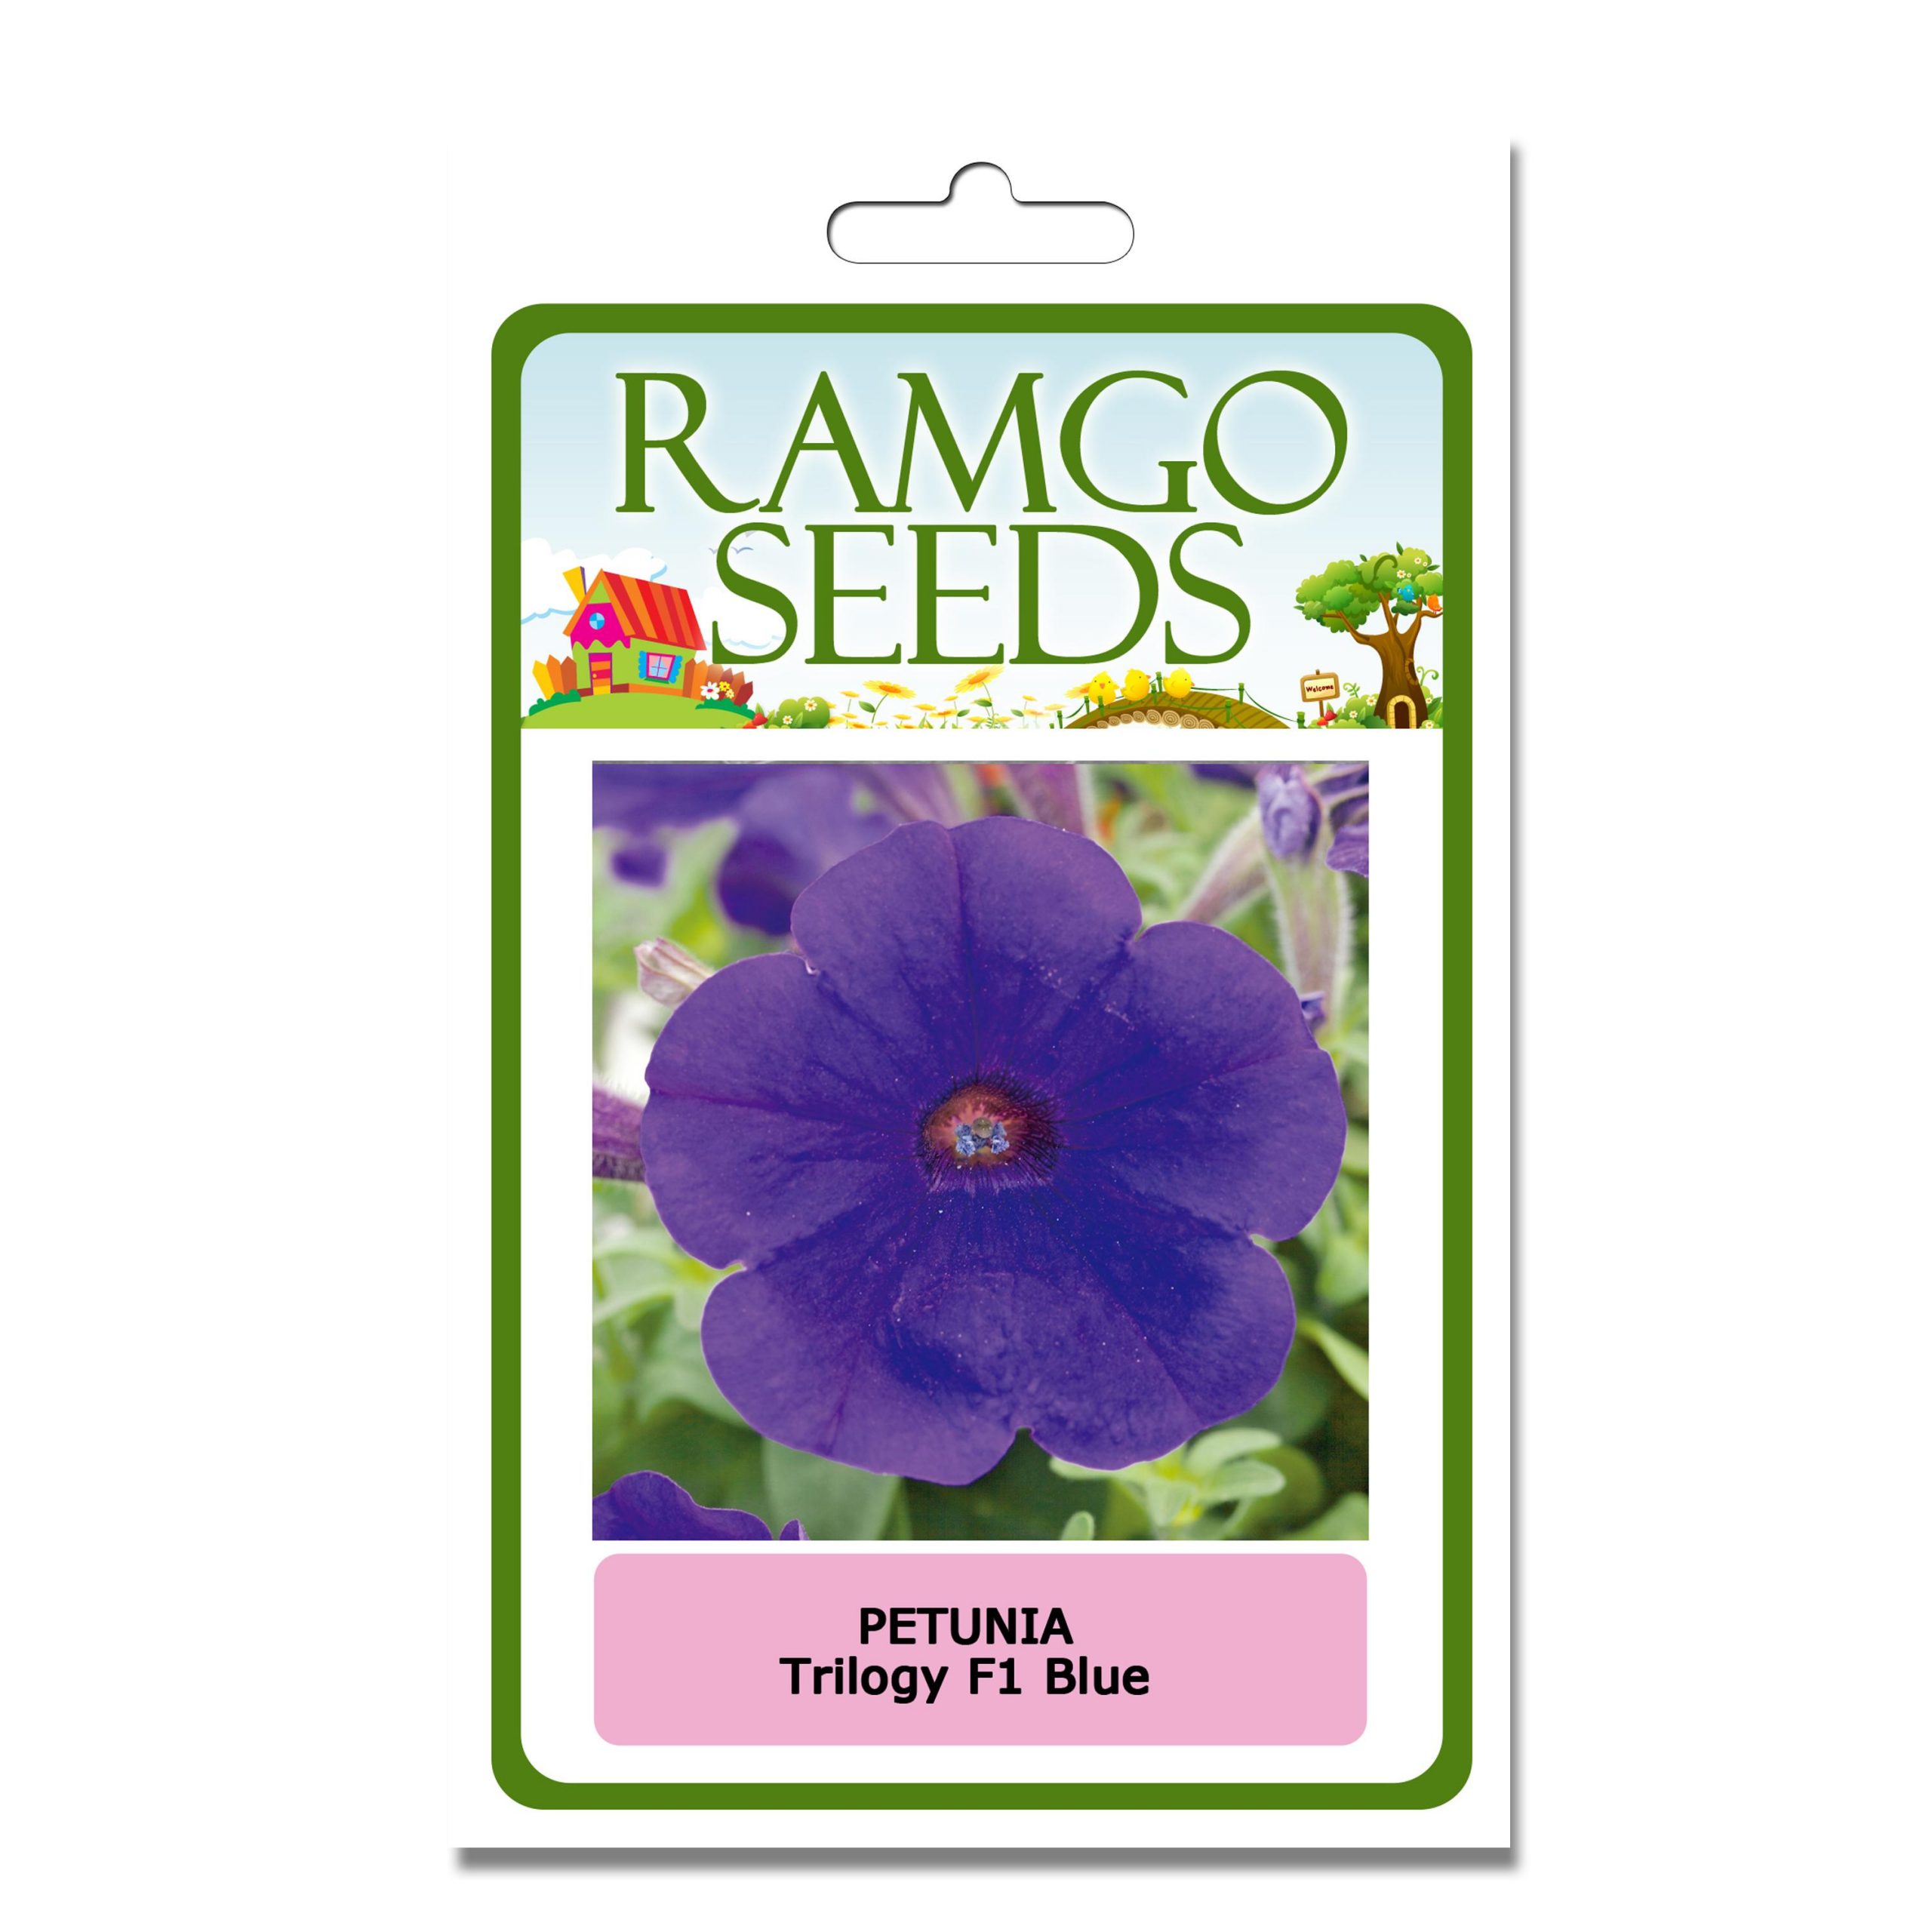 Ramgo Petunia Trilogy Blue Flower Seeds